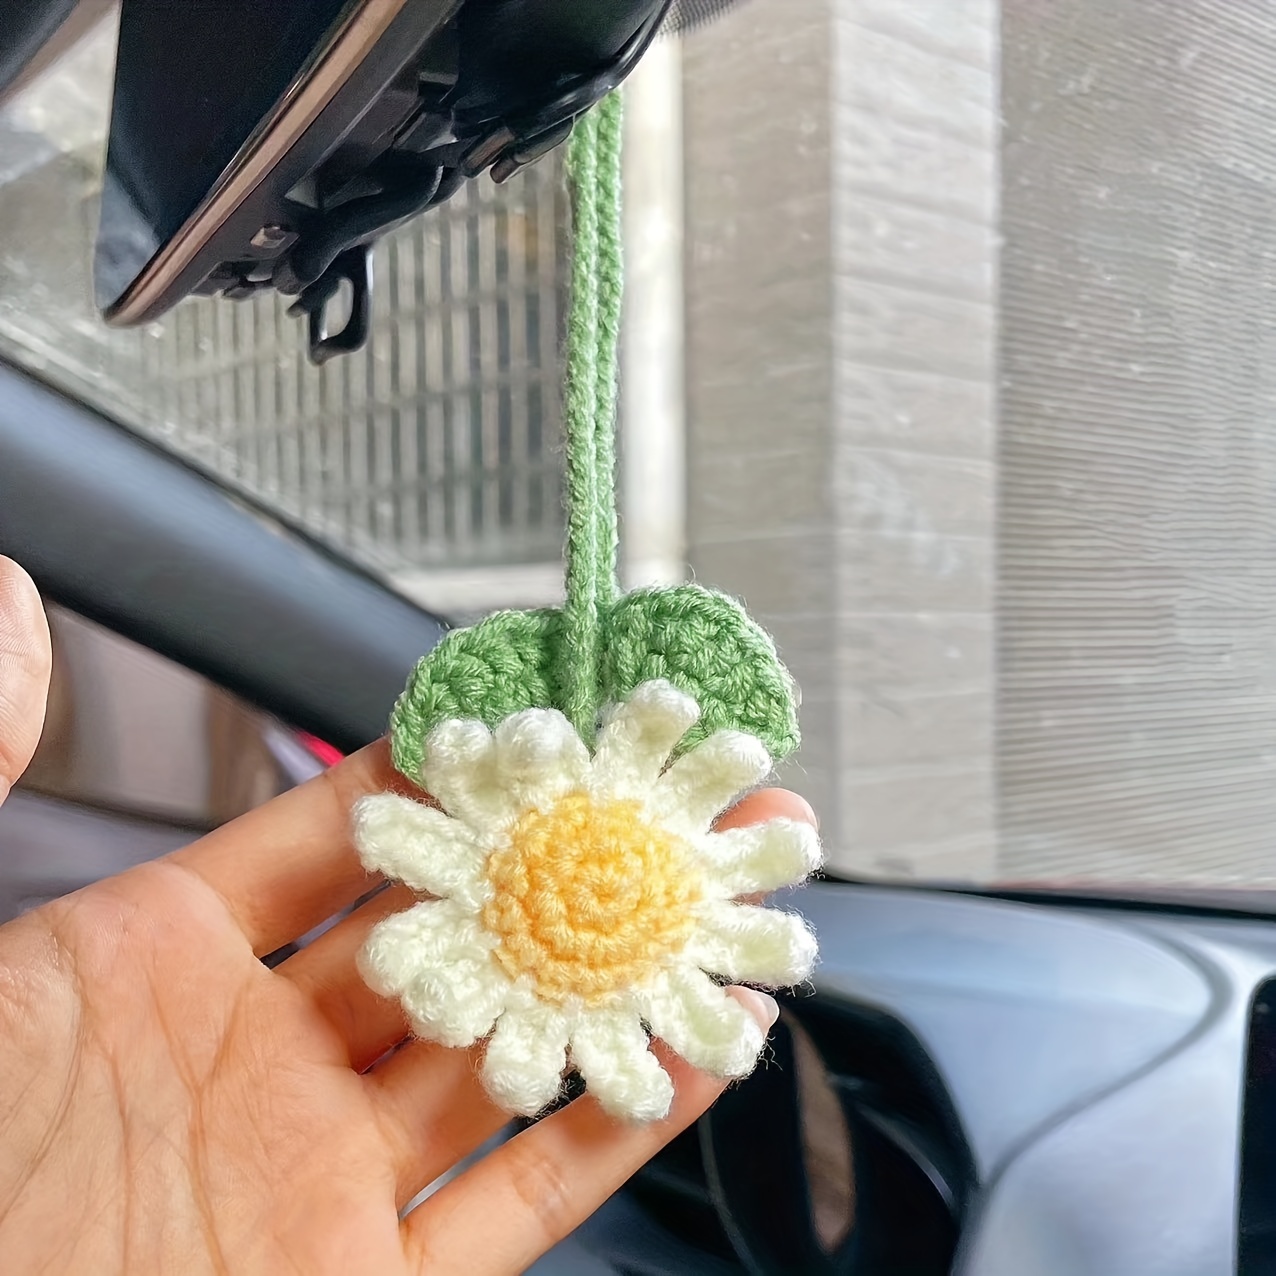 Crochet Rose Car Hanging, Cute Car Accessories for Woman, Car